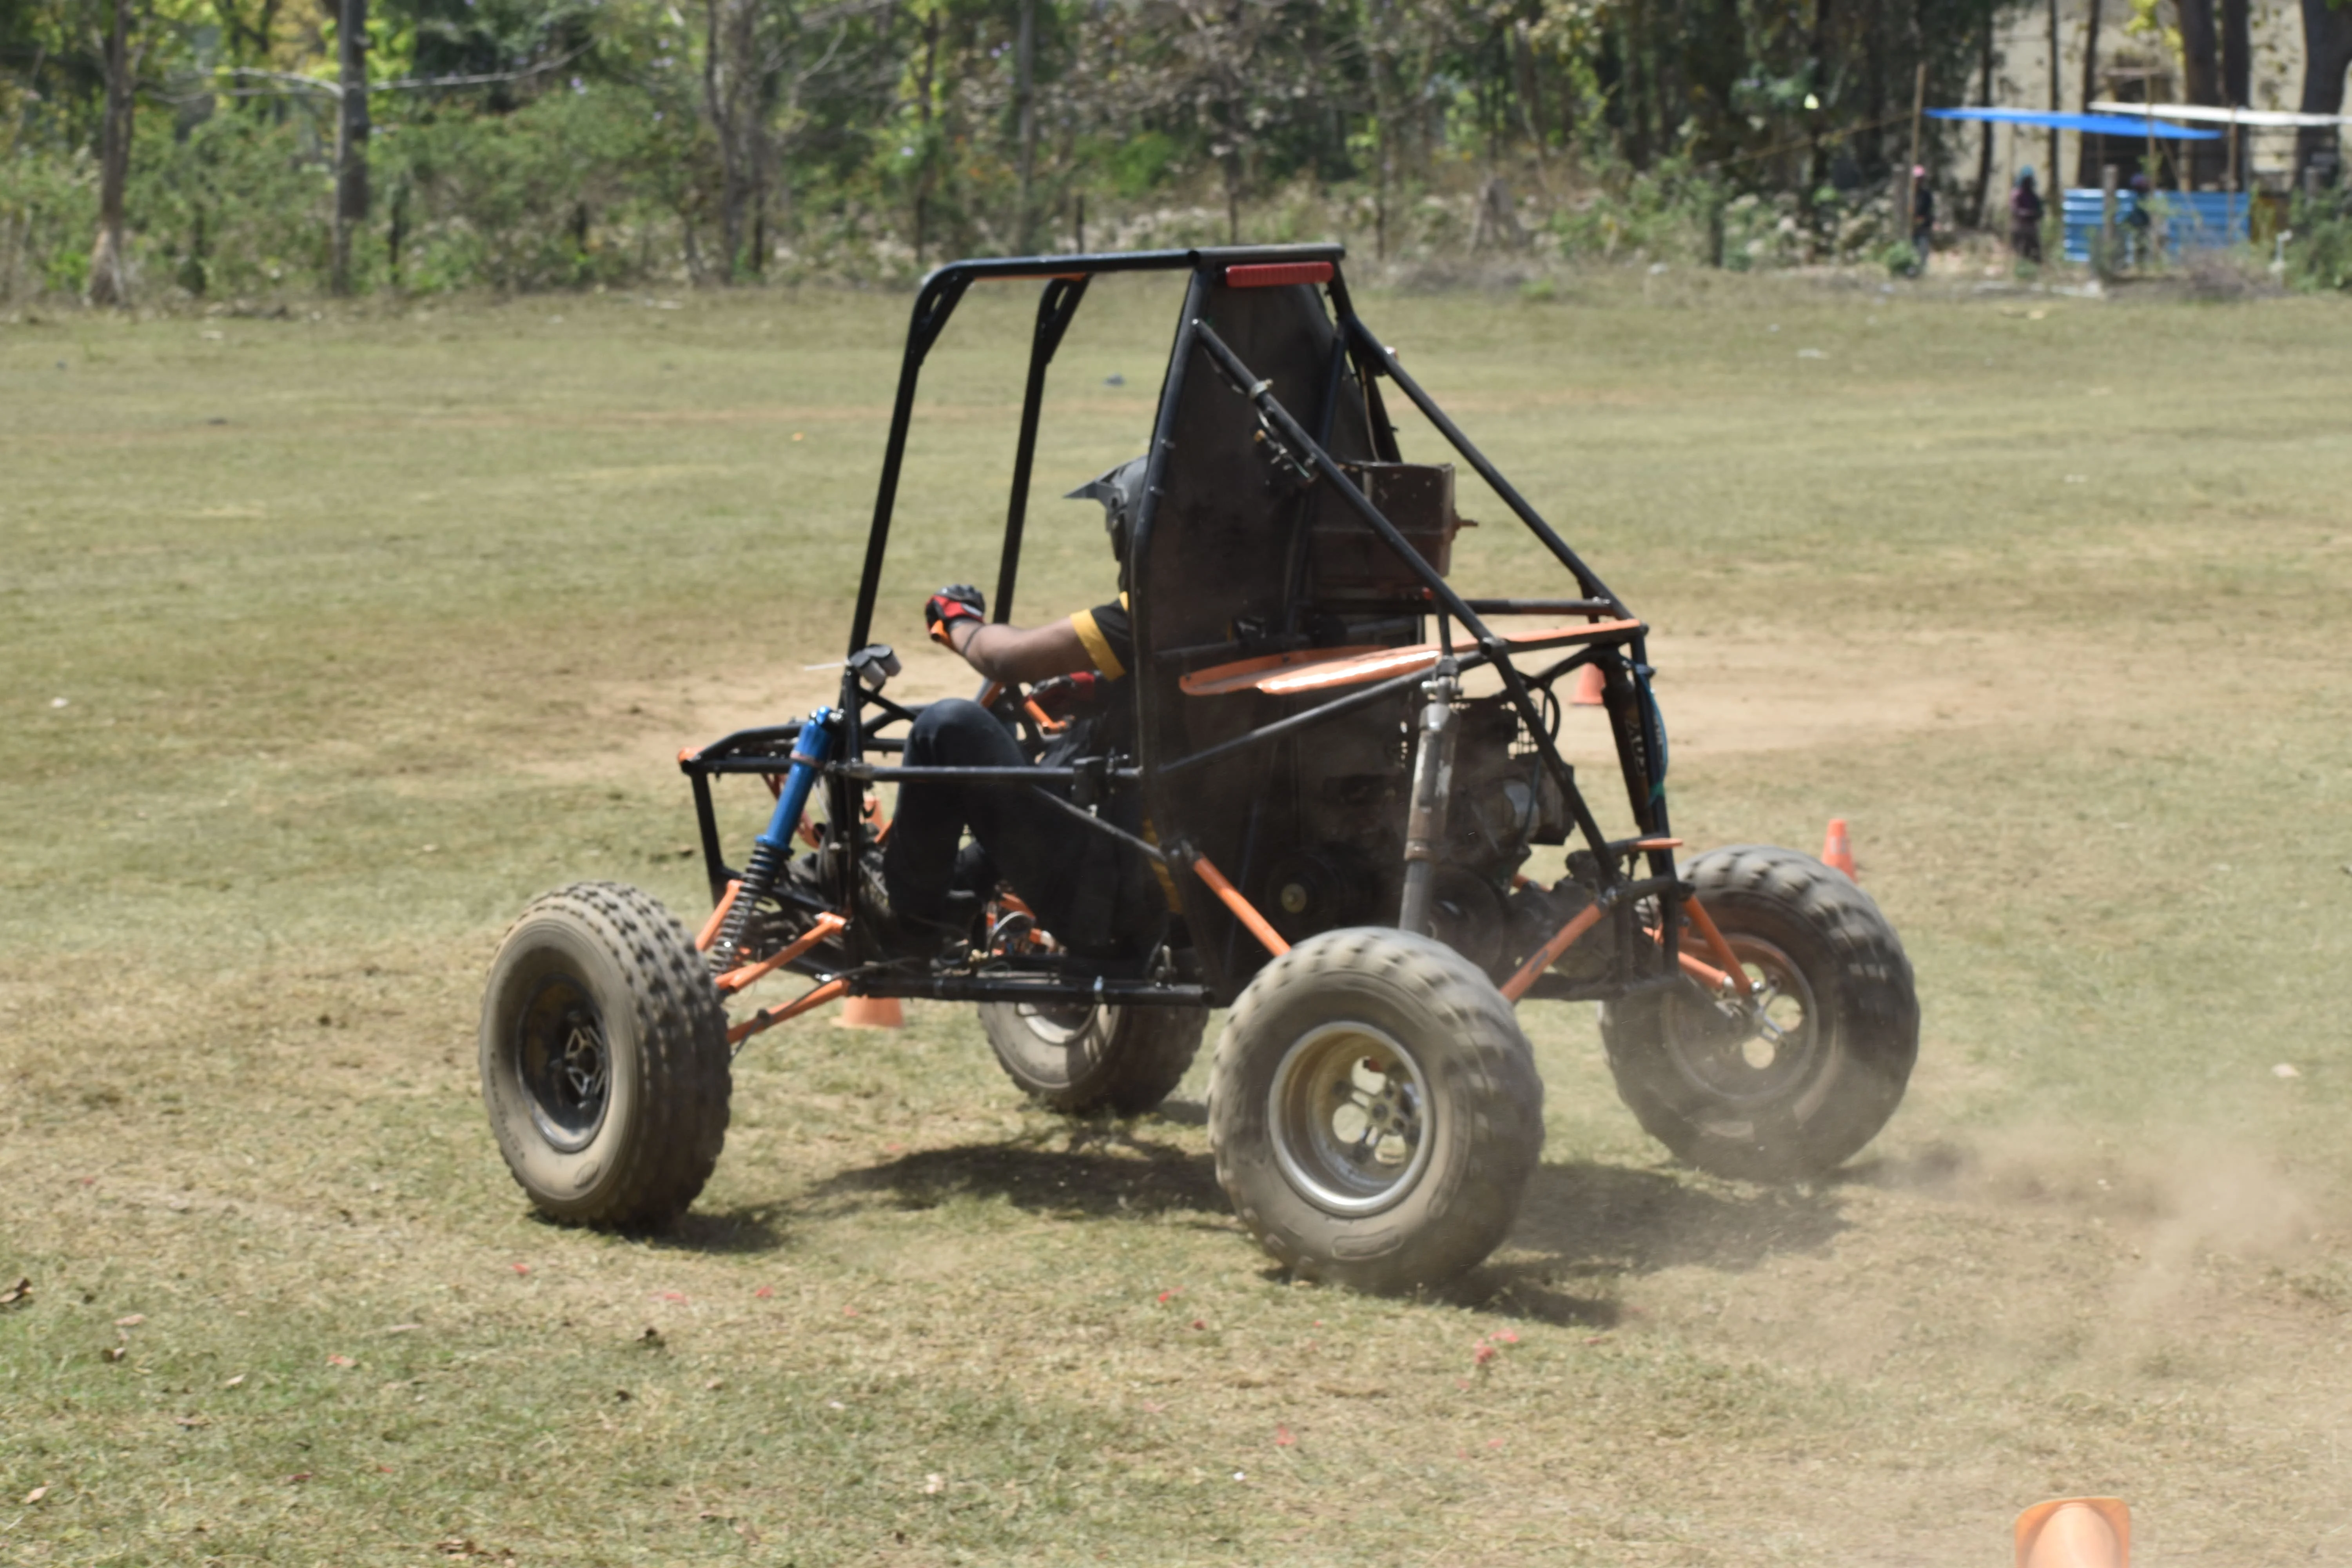 On-ground performance of the ATV